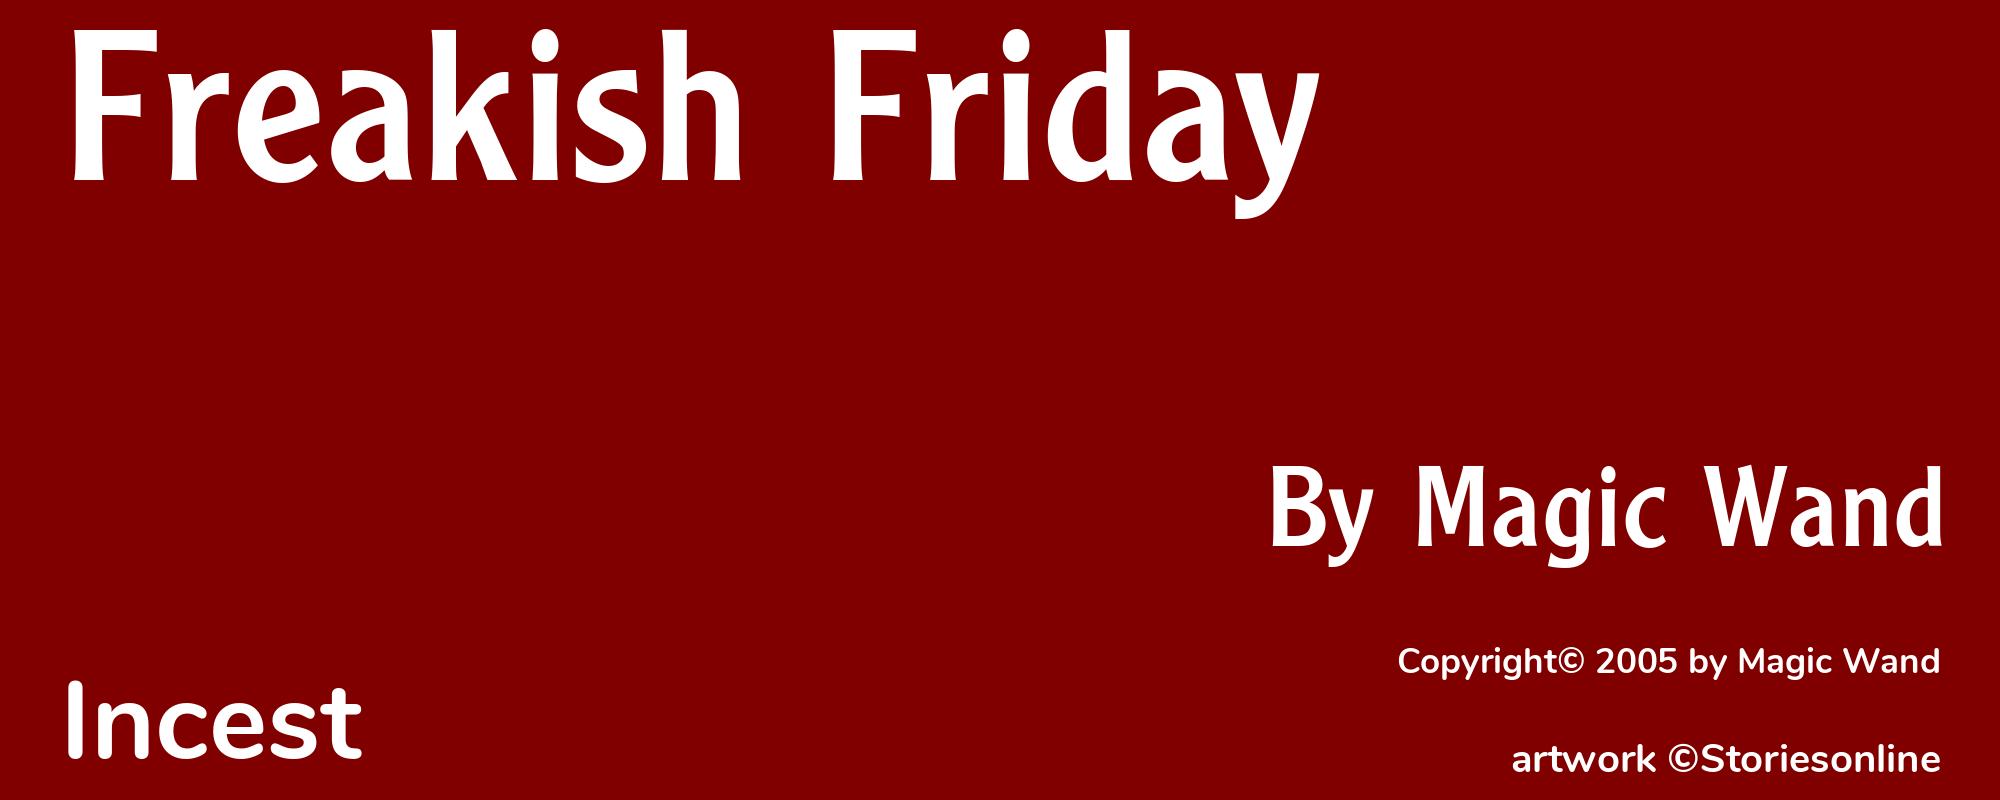 Freakish Friday - Cover